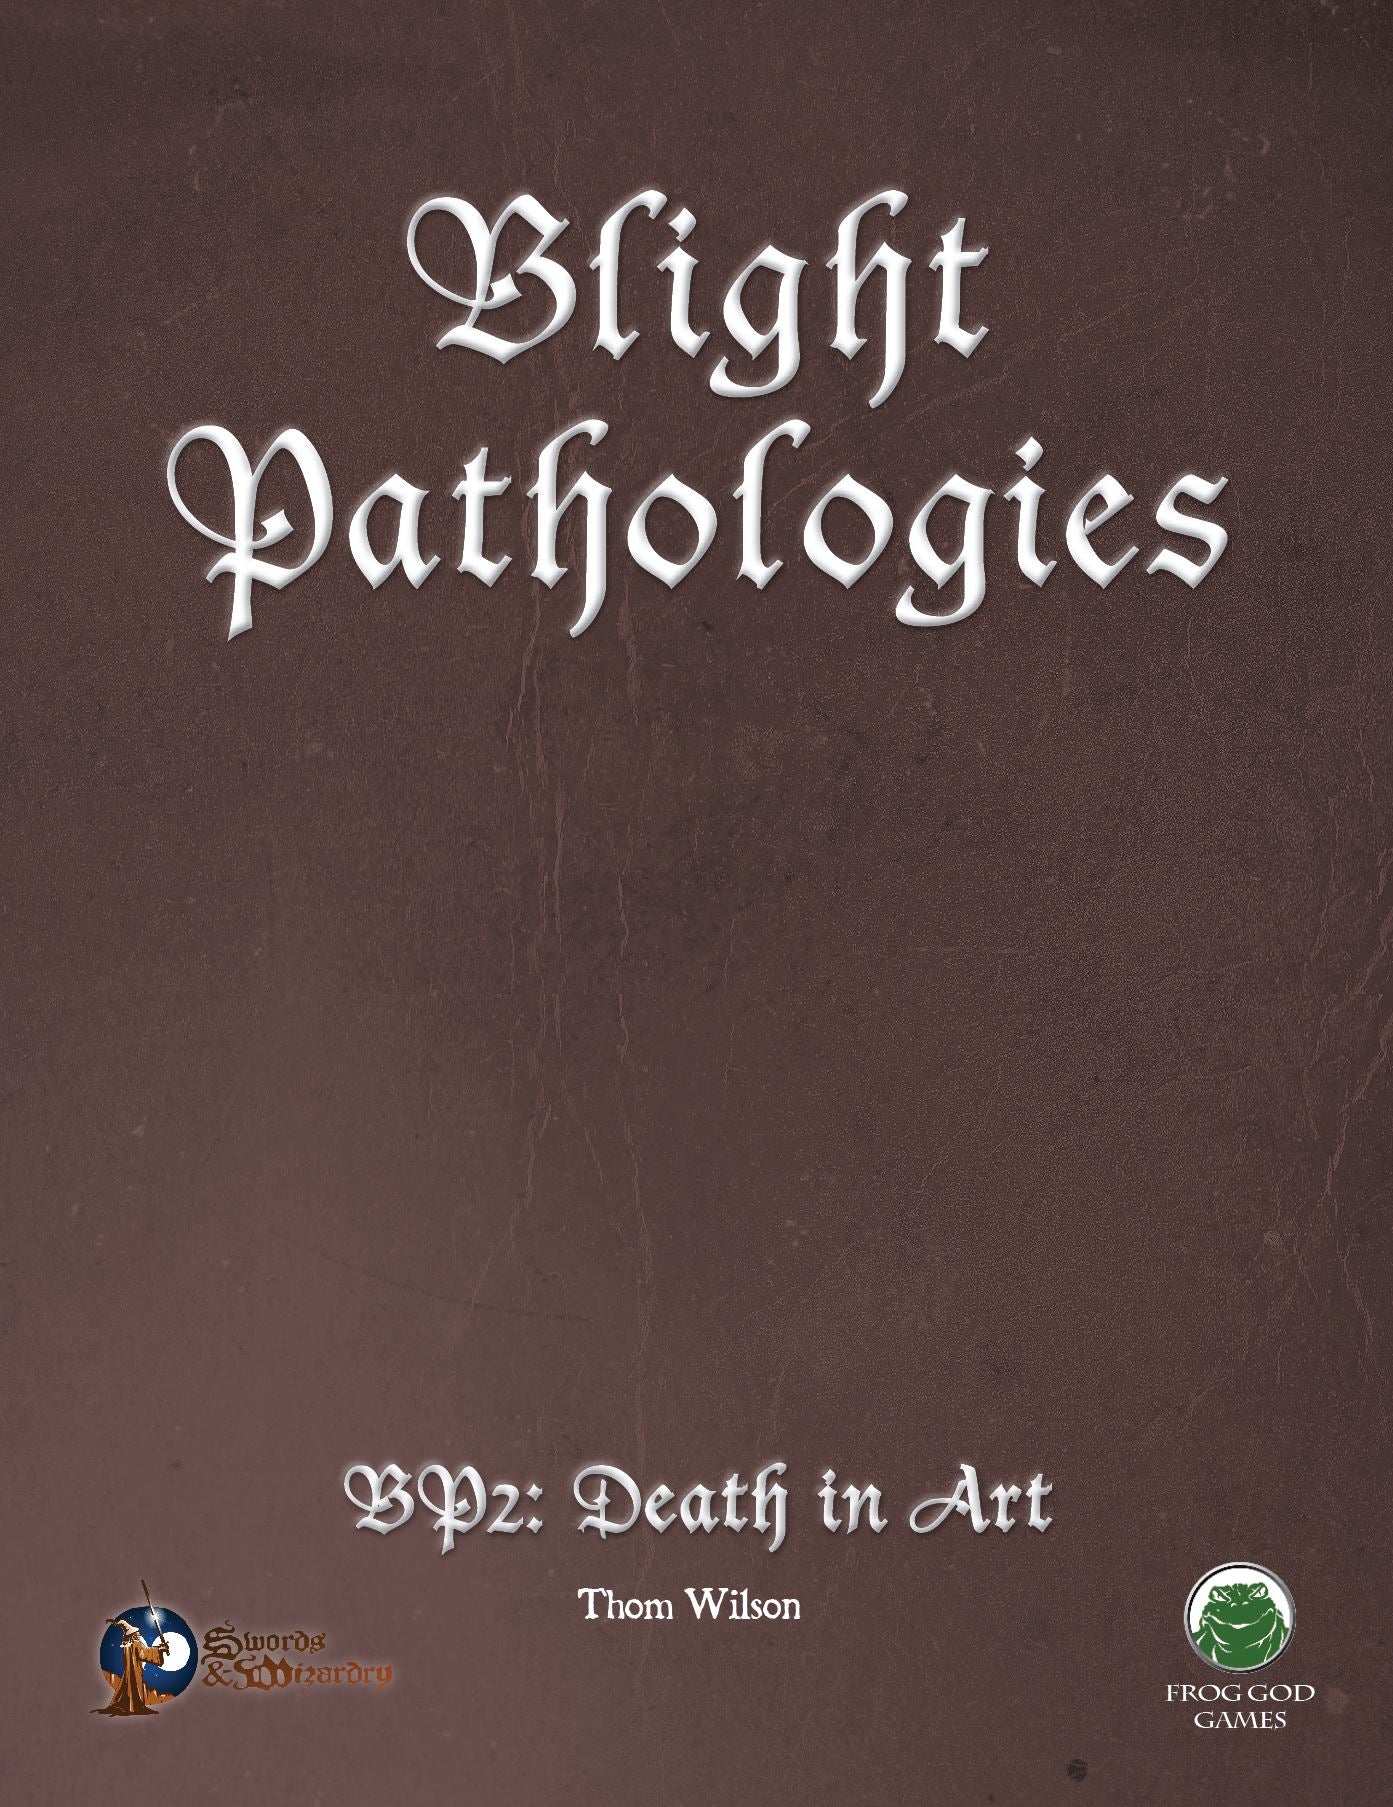 The Blight Pathologies 2: Death in Art